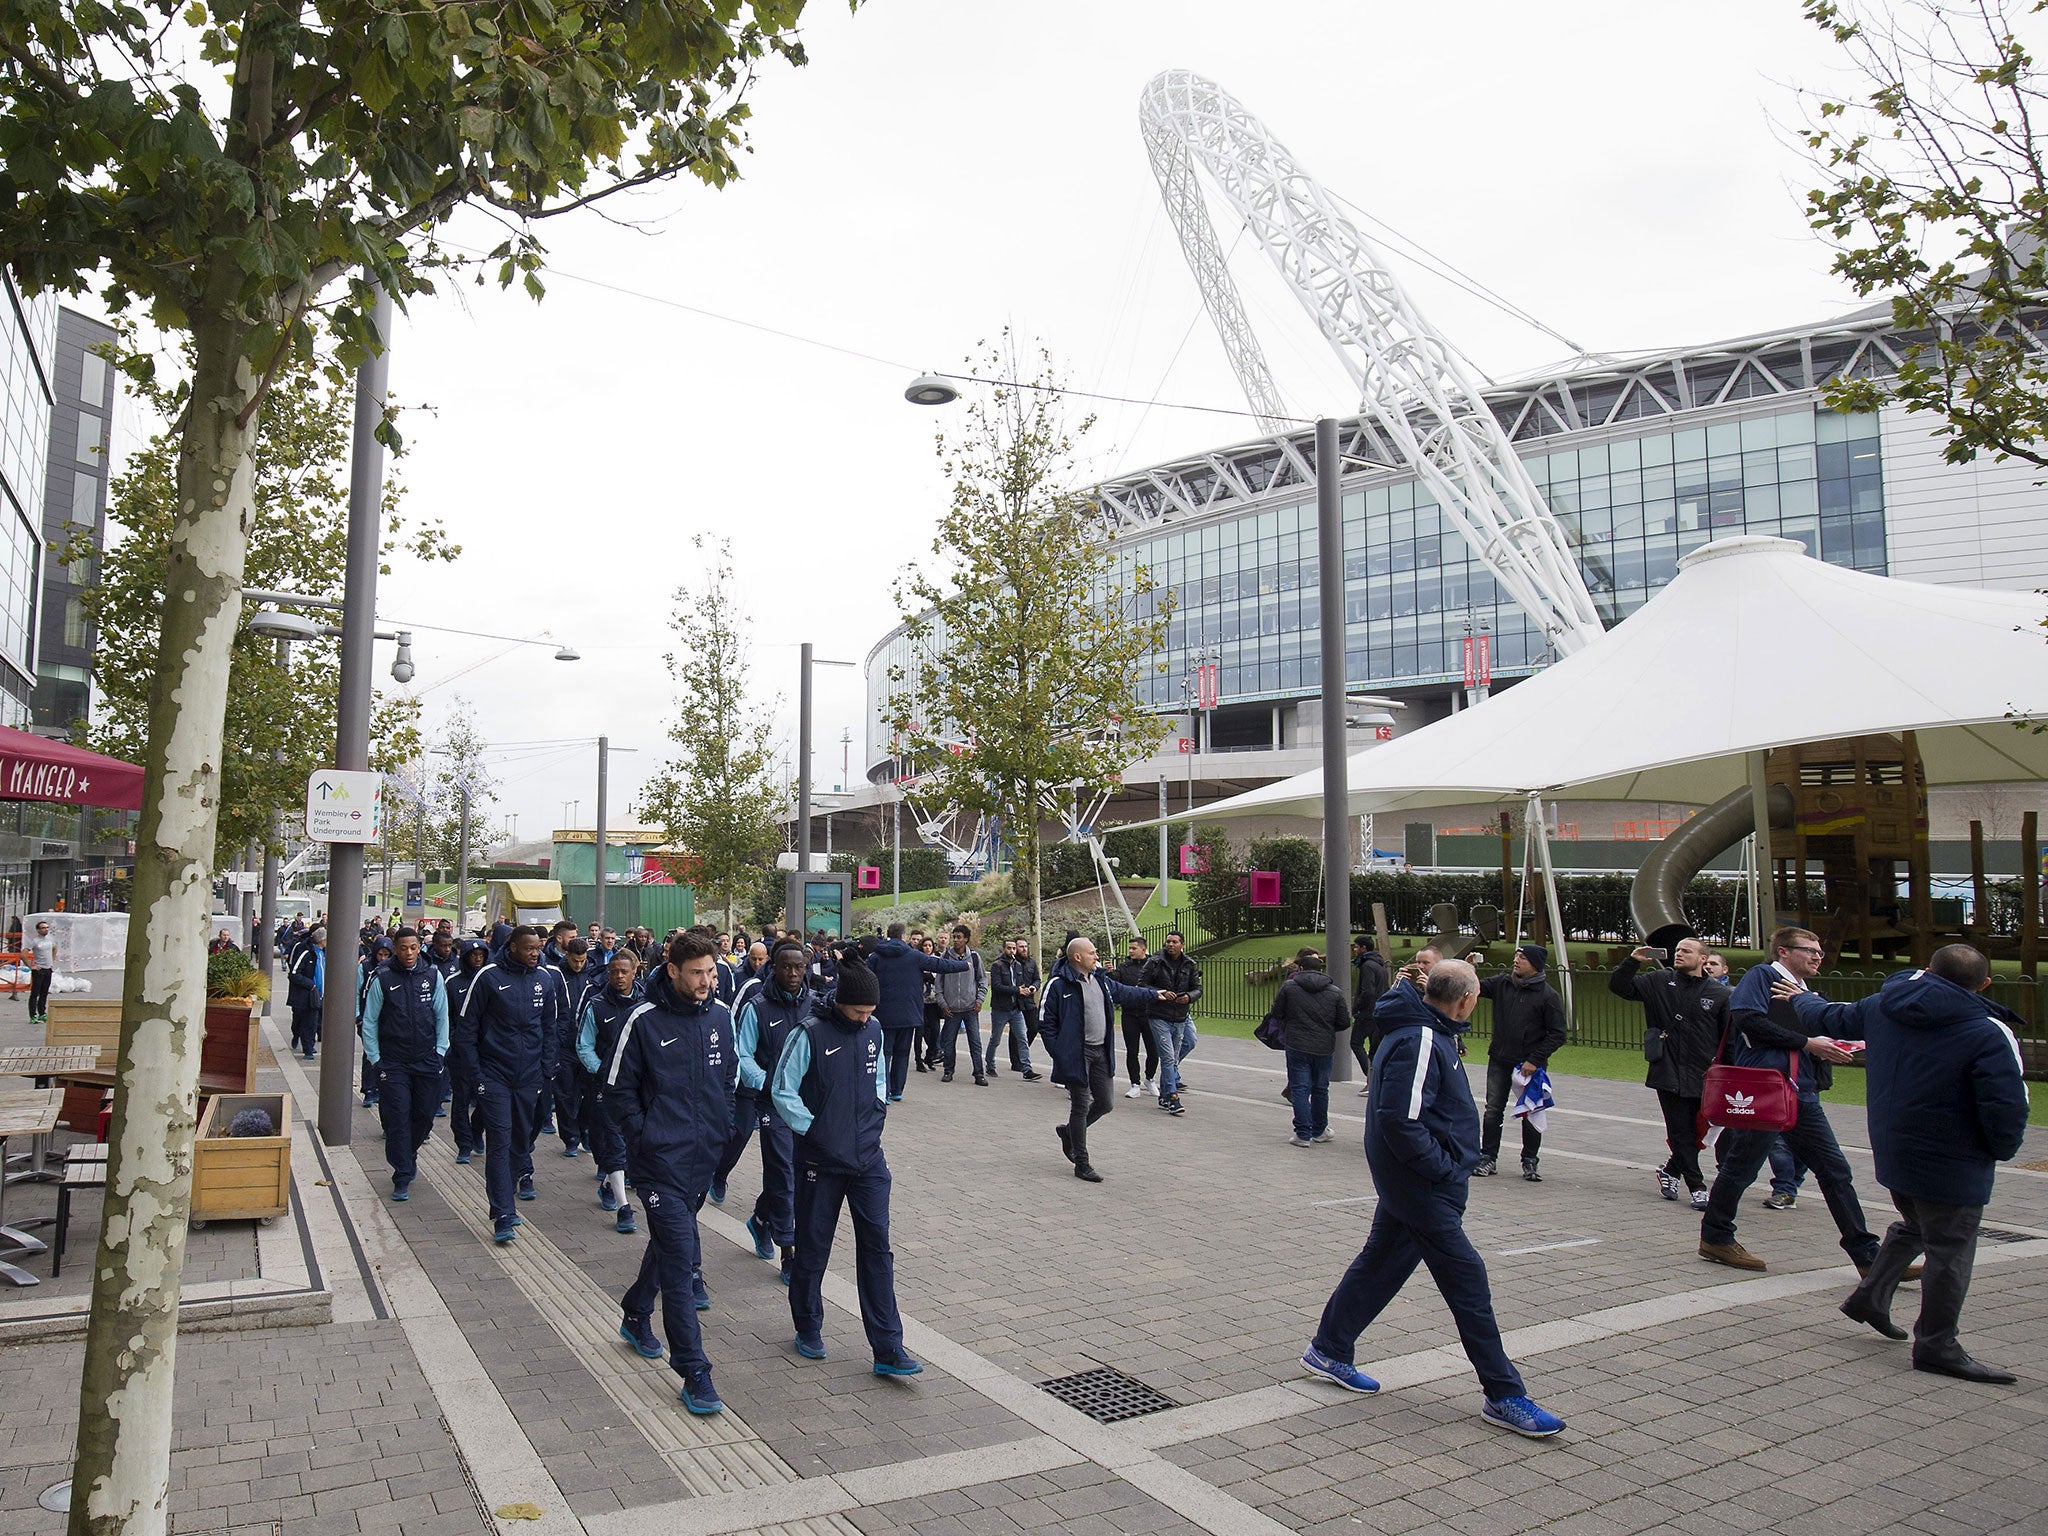 The French national team walk around Wembley Stadium on Tuesday